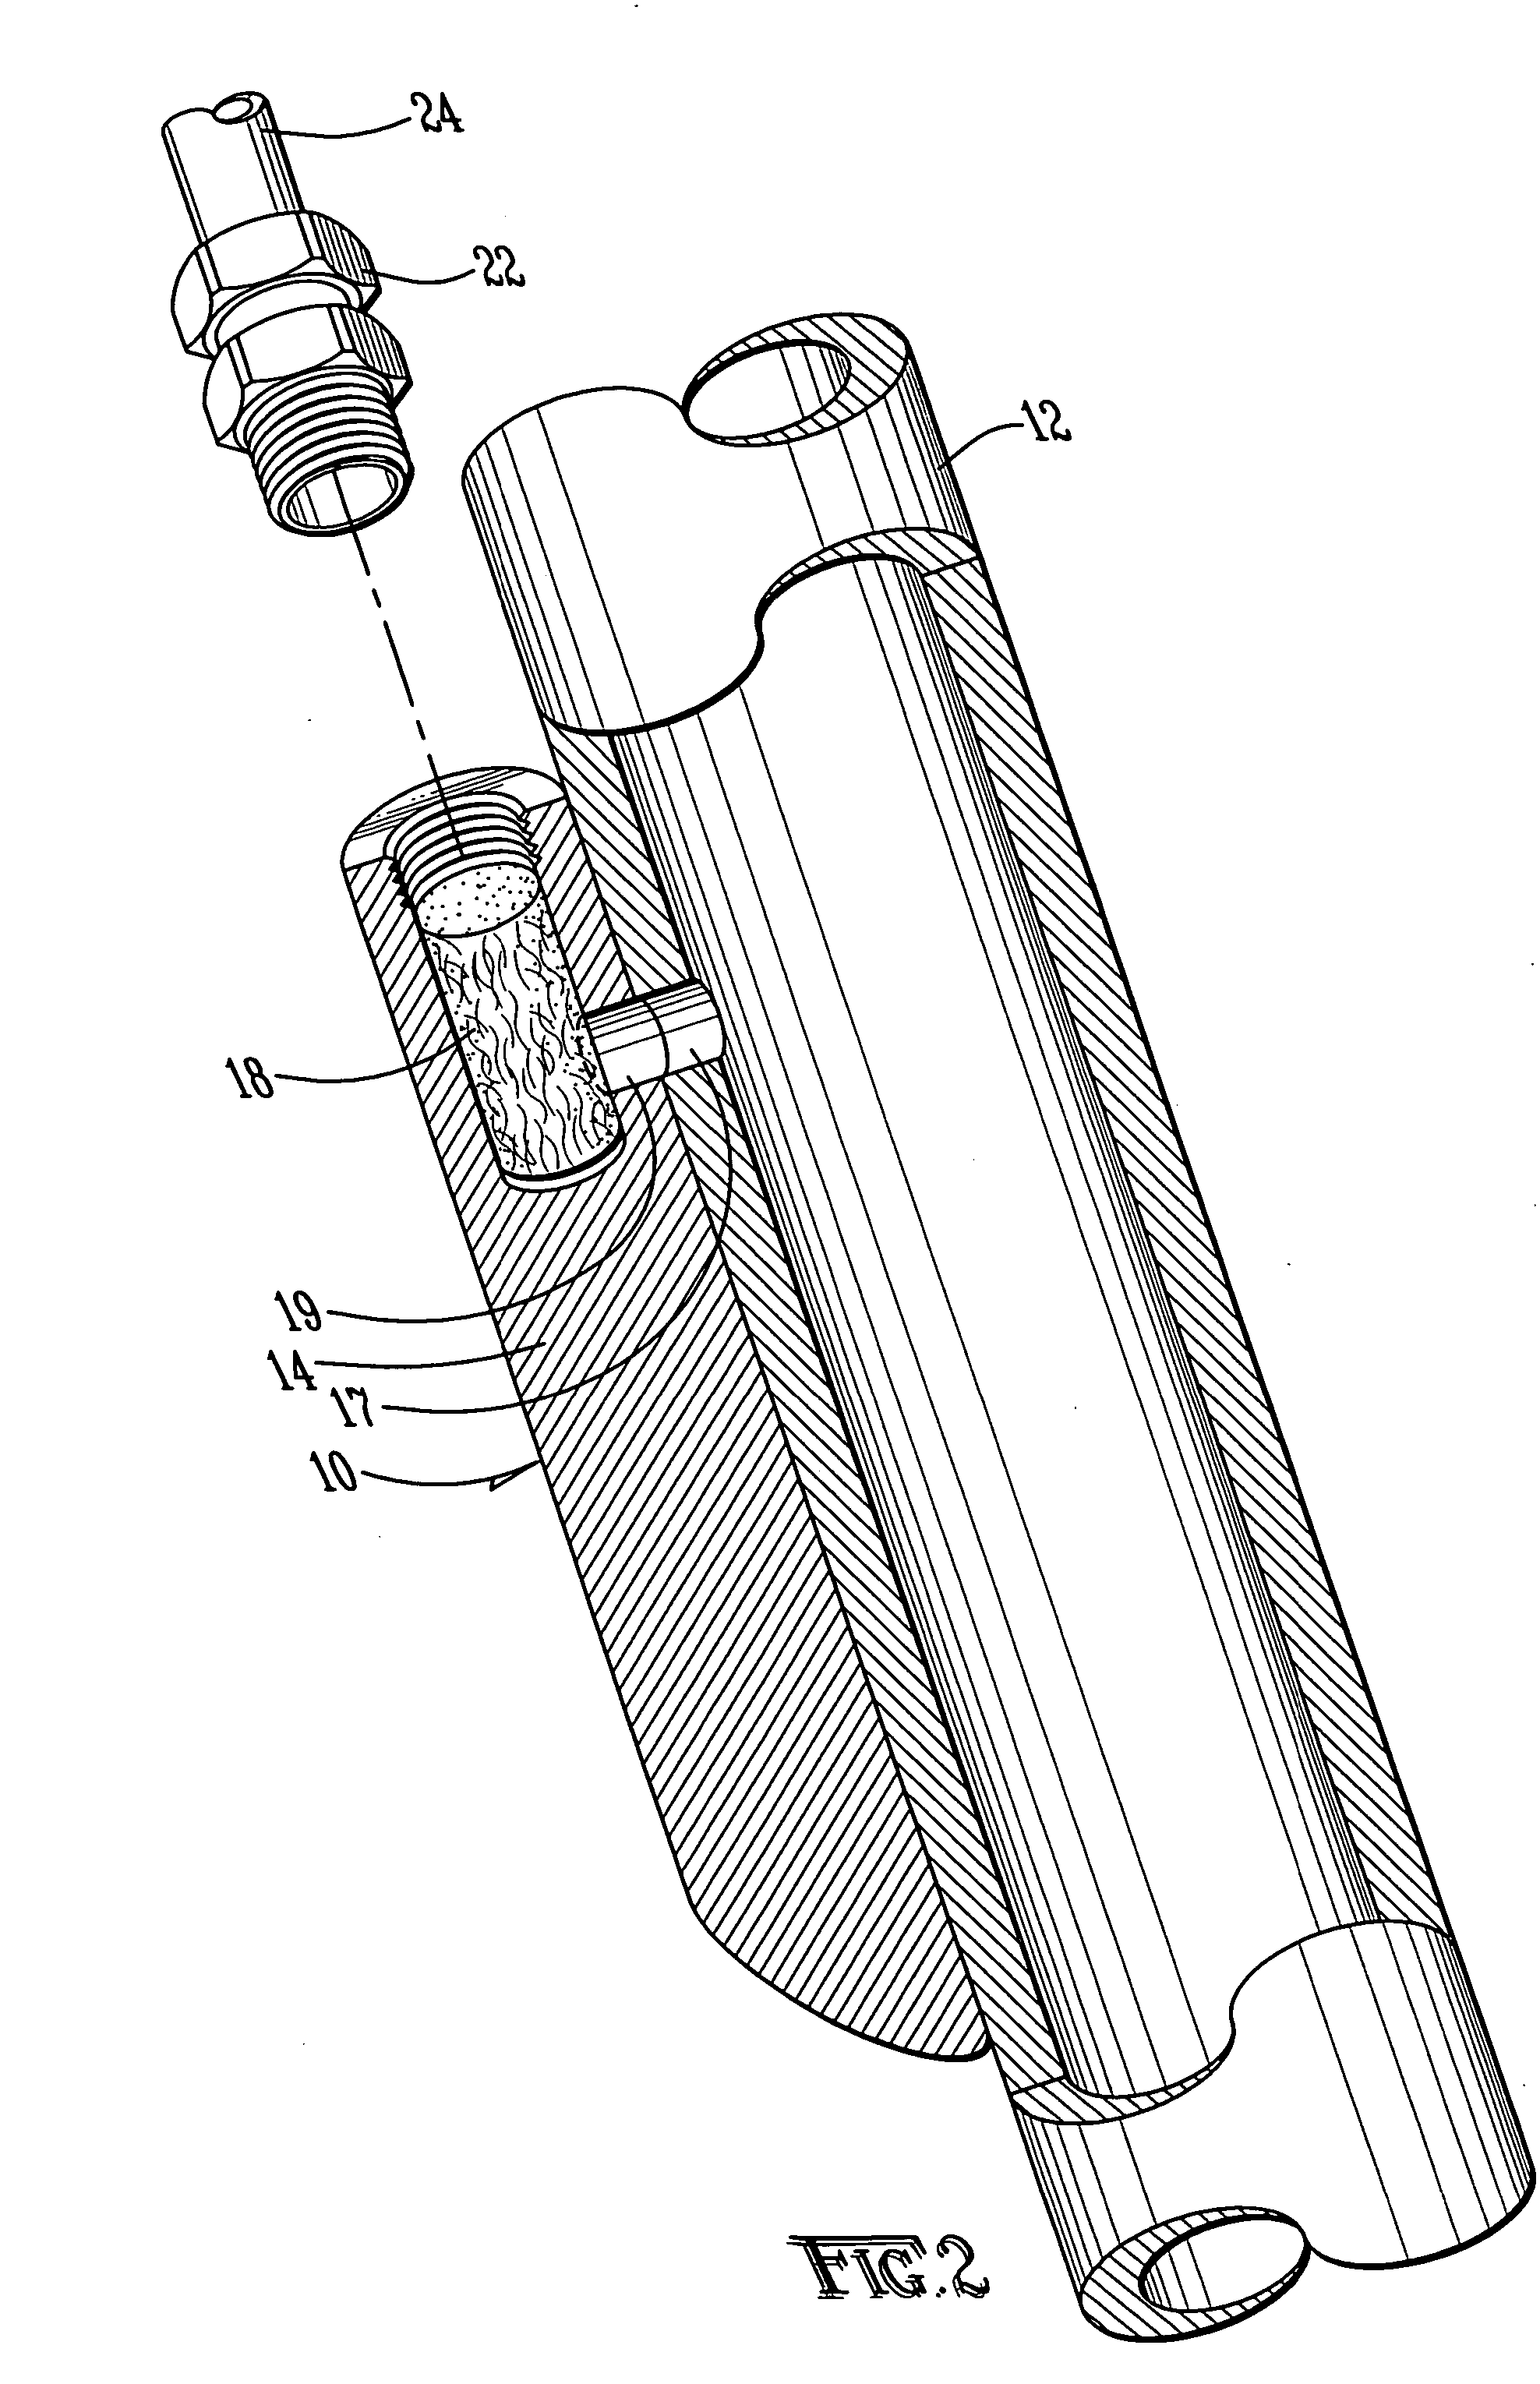 Apparatus for monitoring pressure using capillary tubing